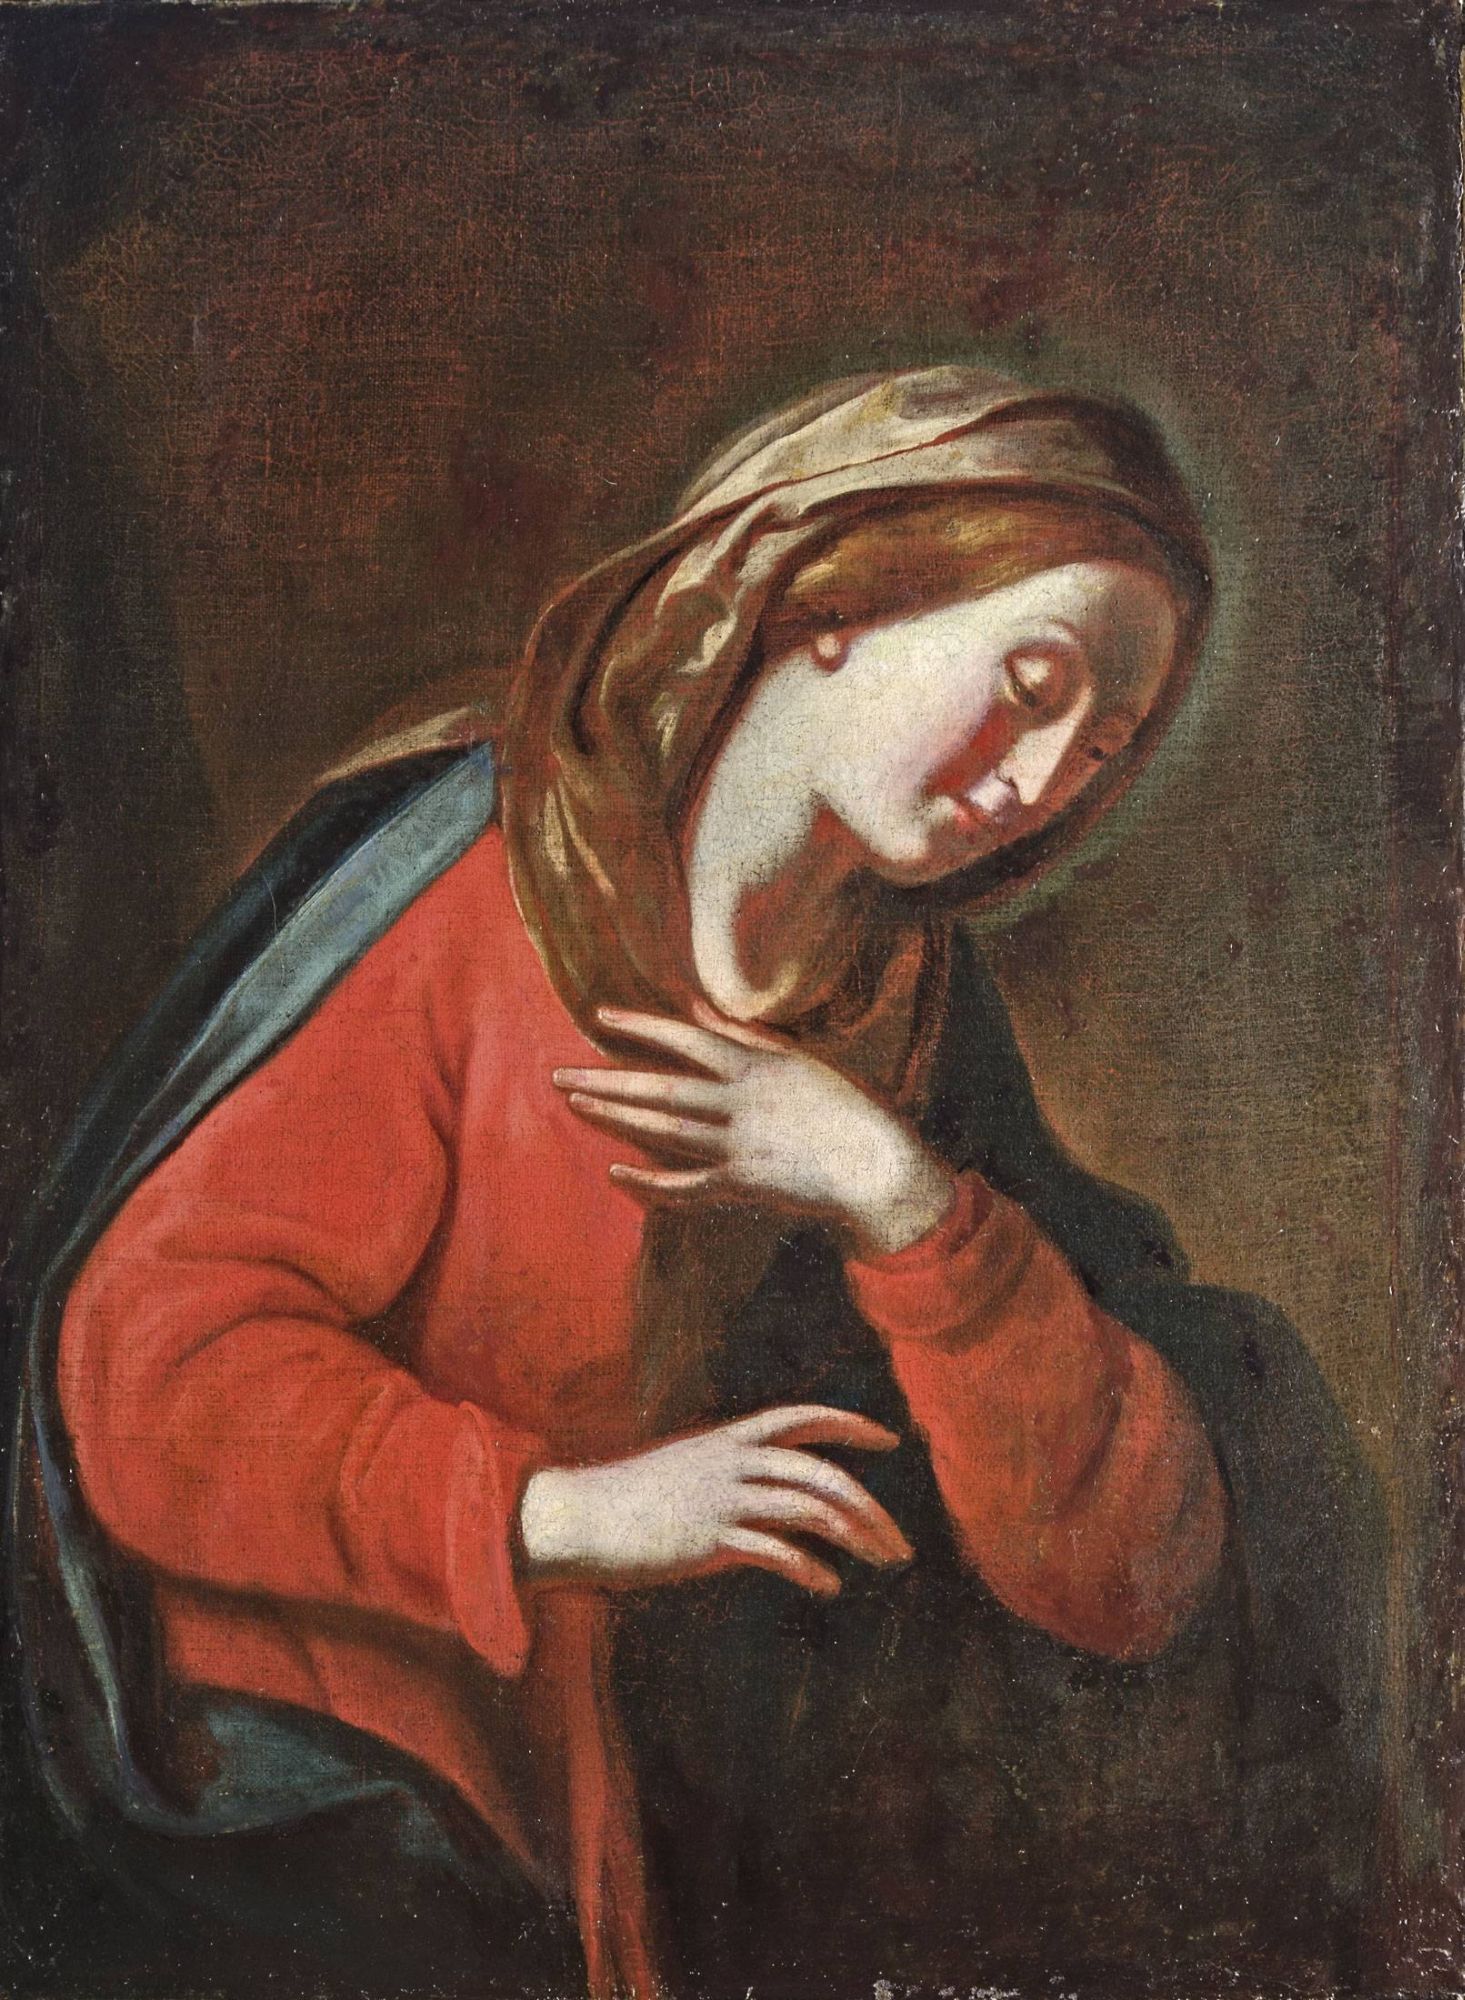 Norhtern-Italian painter, around 1700  - Madonna 94*69 cm, oil on doubled canvas  Reserve price: